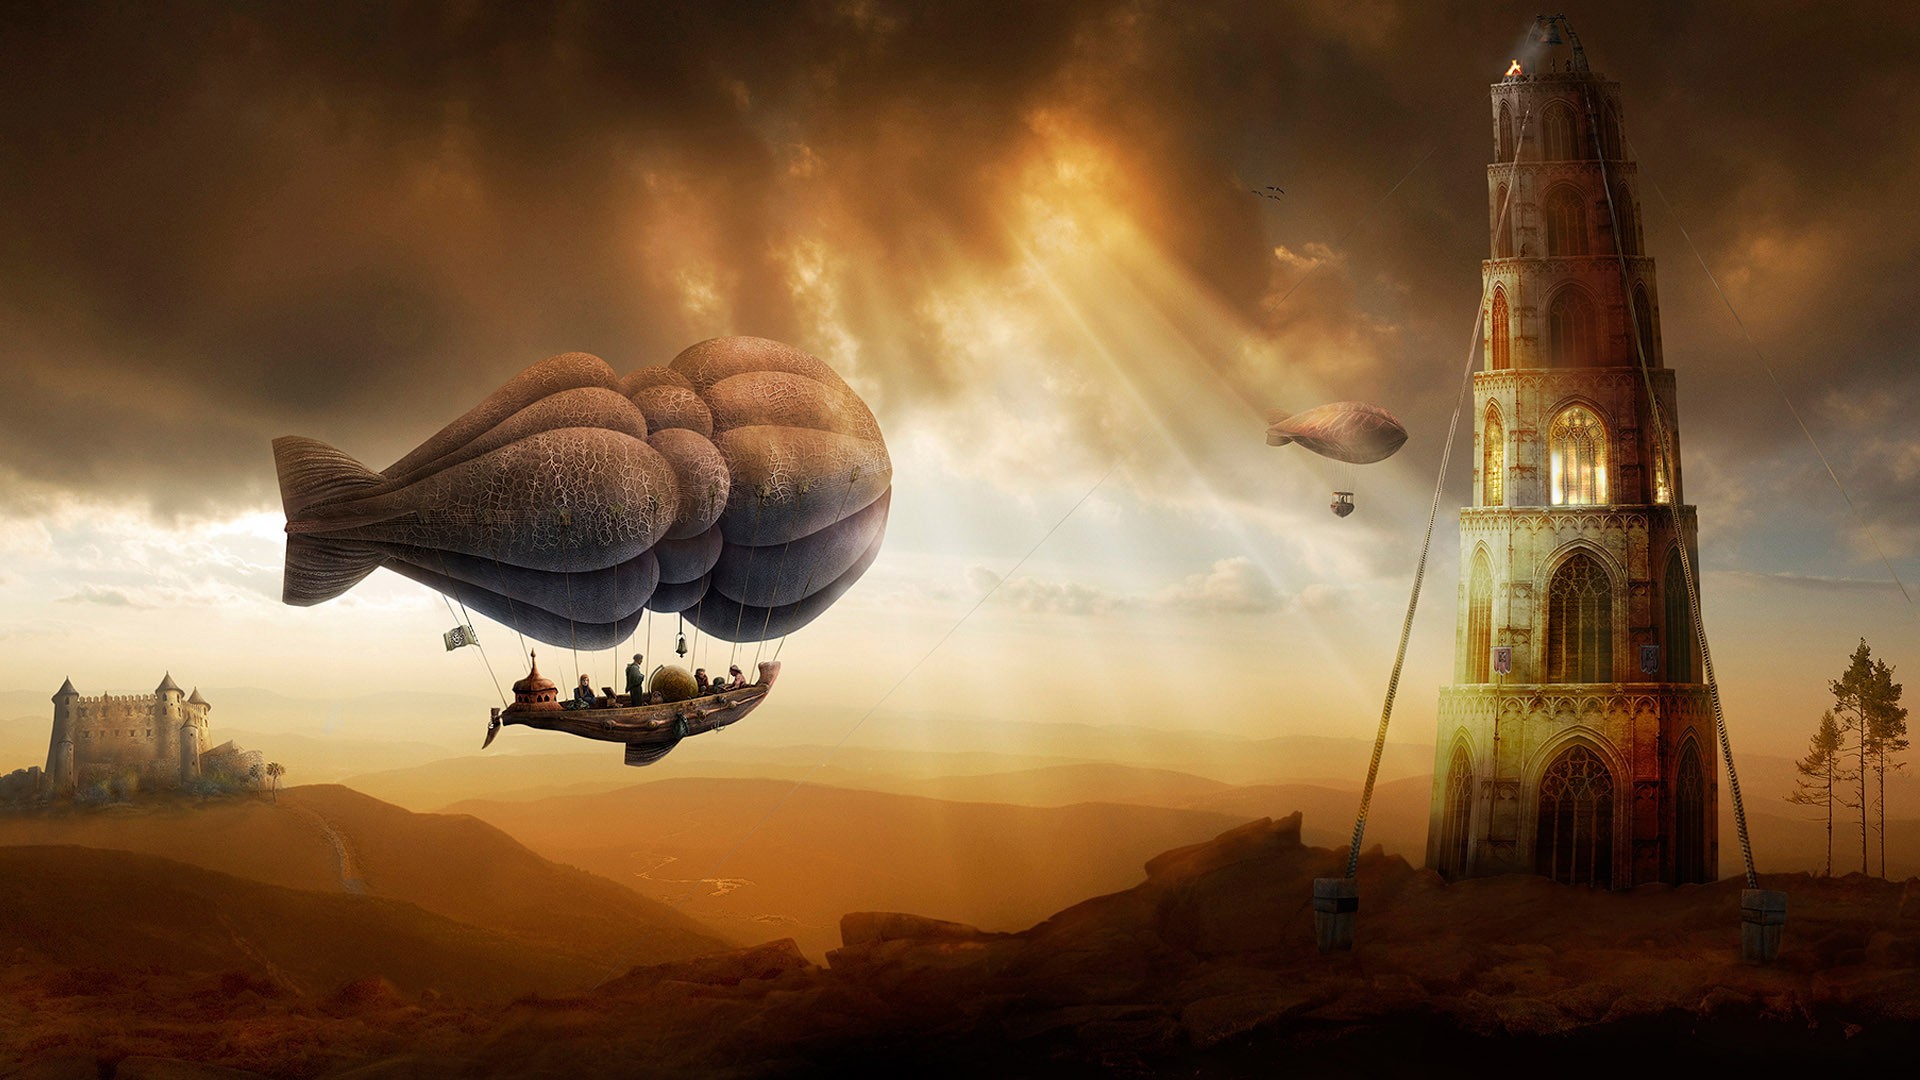 Digital Art Fantasy Art Nature Painting Zeppelin People Trees Tower Castle Hills Clouds Sun Rays Lan 1920x1080